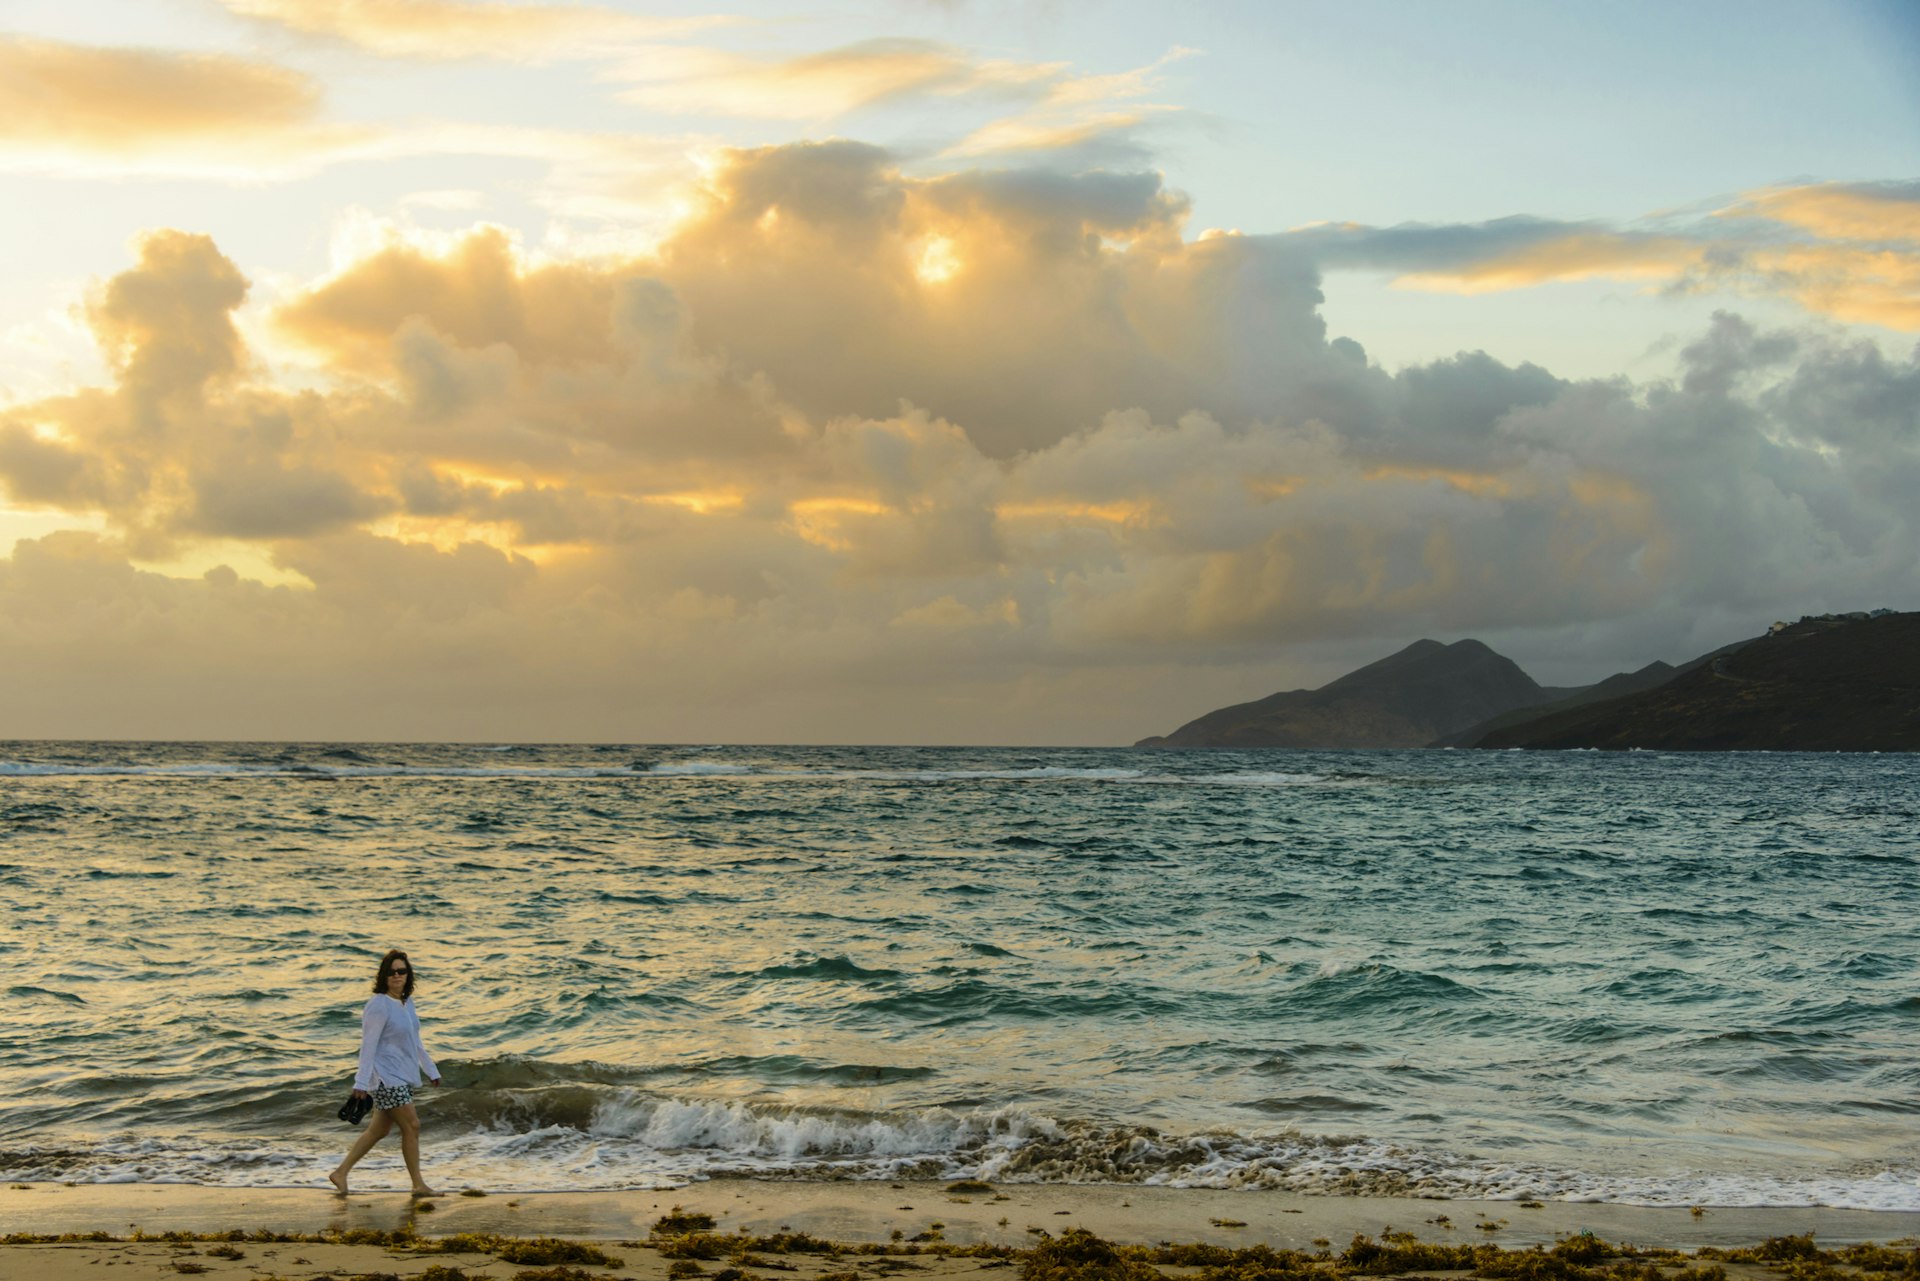 A barefoot woman walks along the shore of a sandy beach as the sun rises